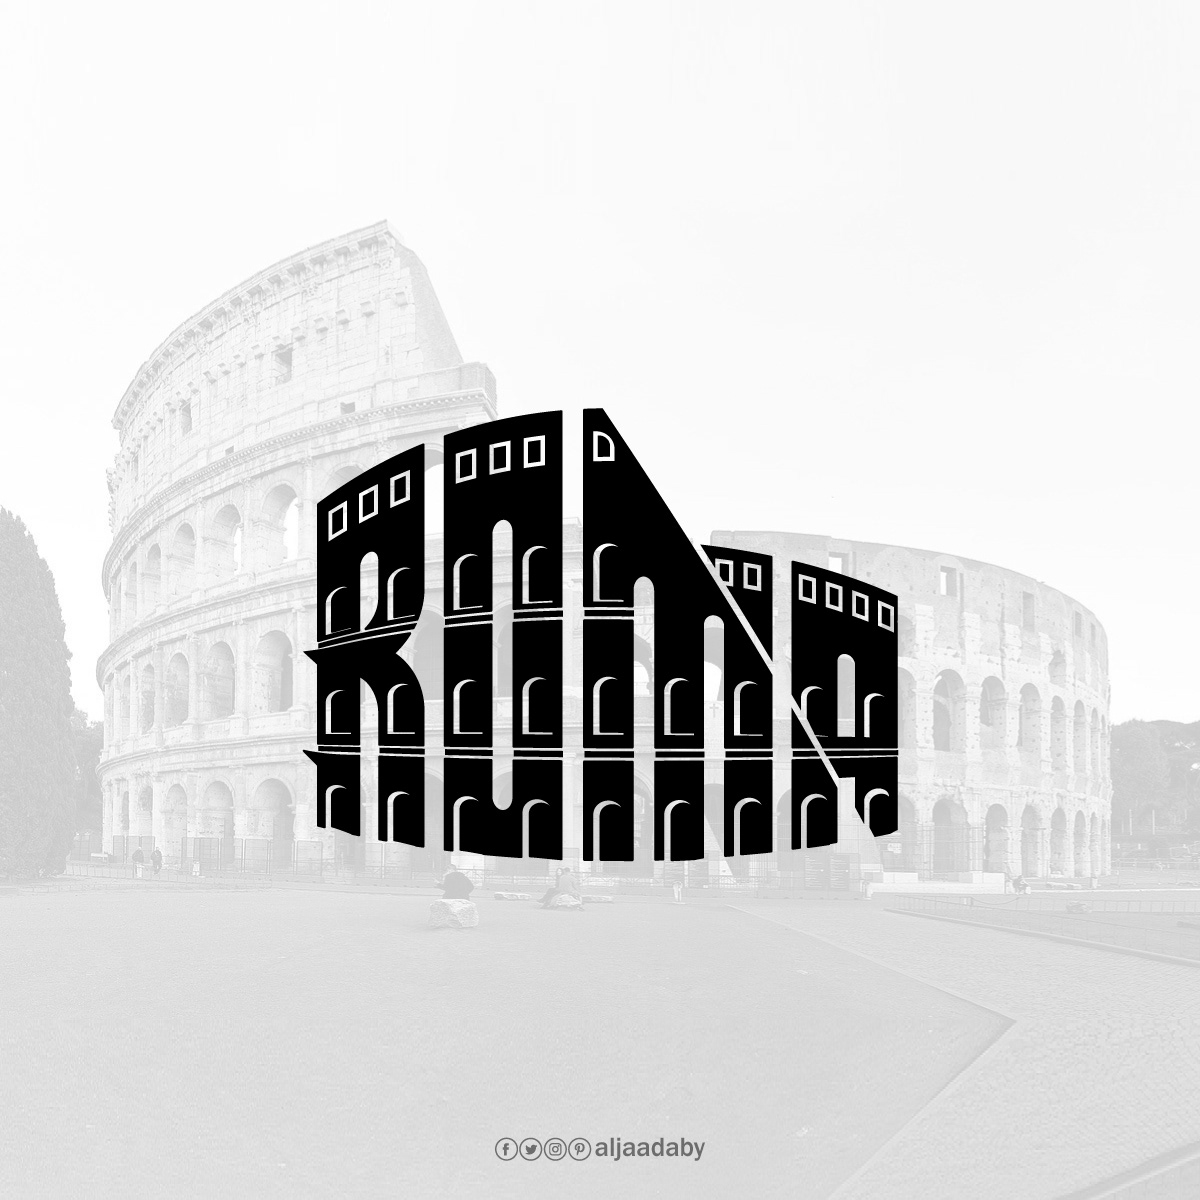 Typographic city logos based on their famous landmarks - Roma